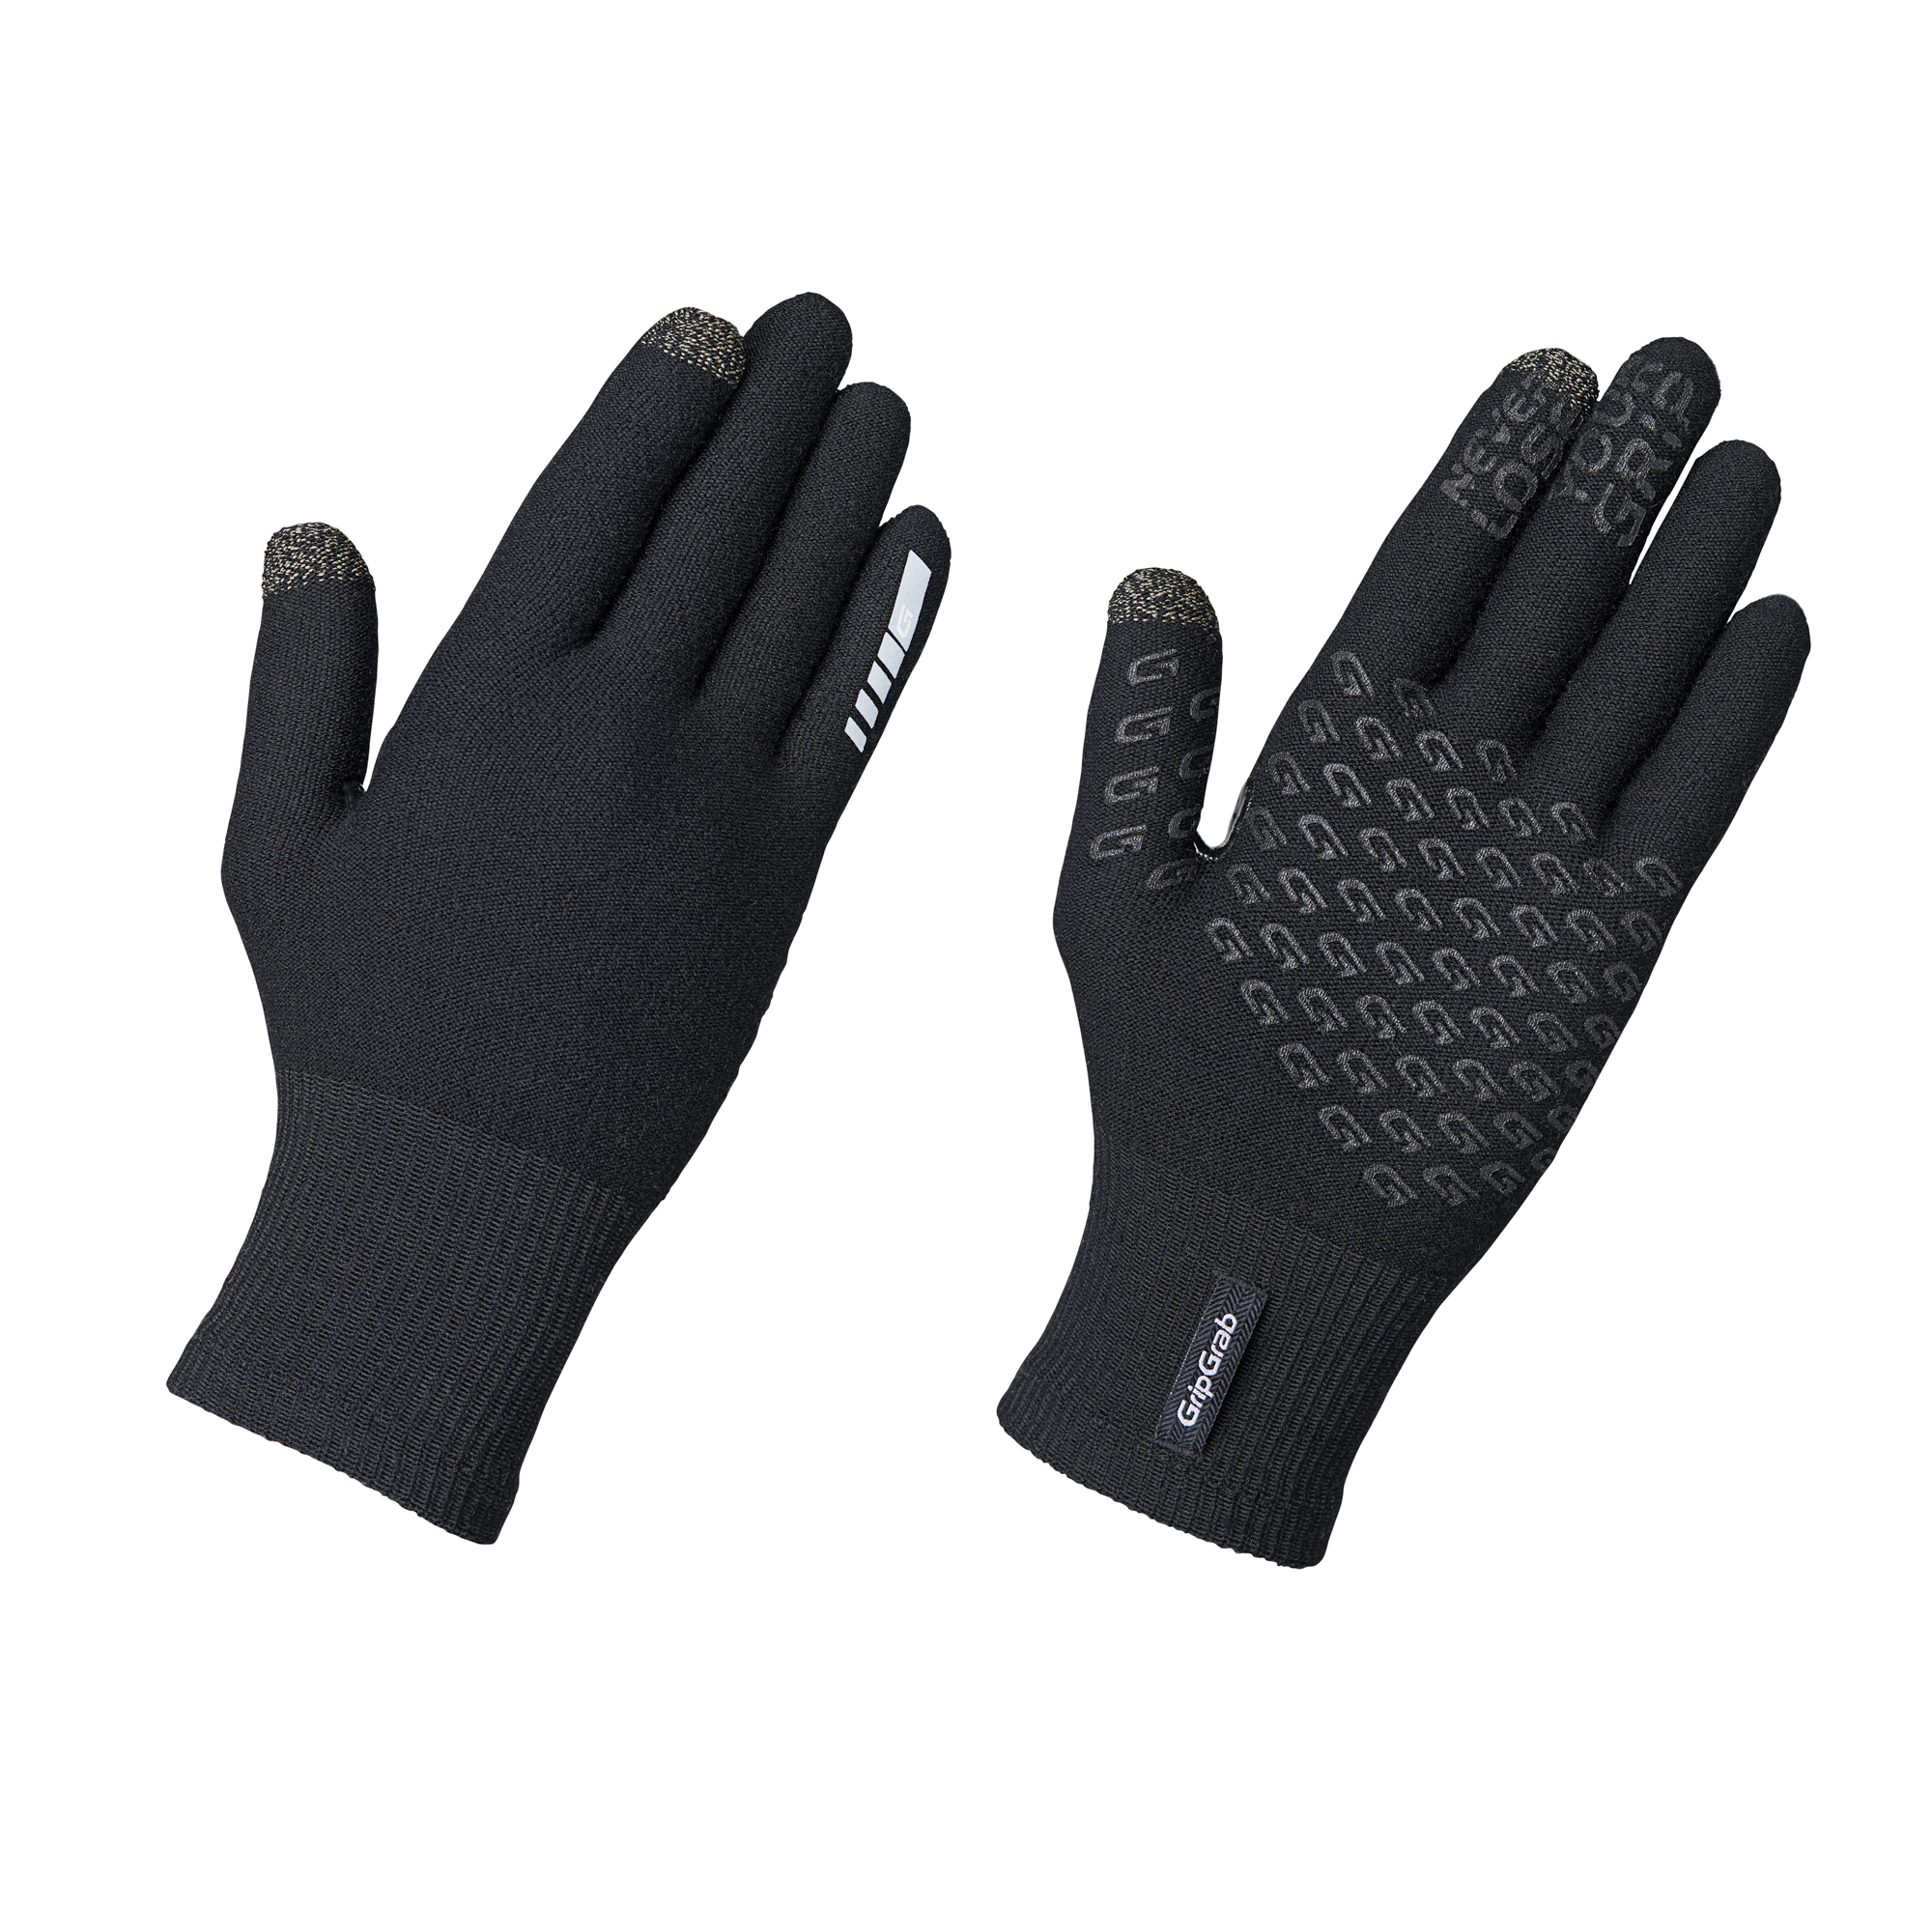 Zimní rukavice GRIP GRAB Primavera Merino Midseason černé XS-S